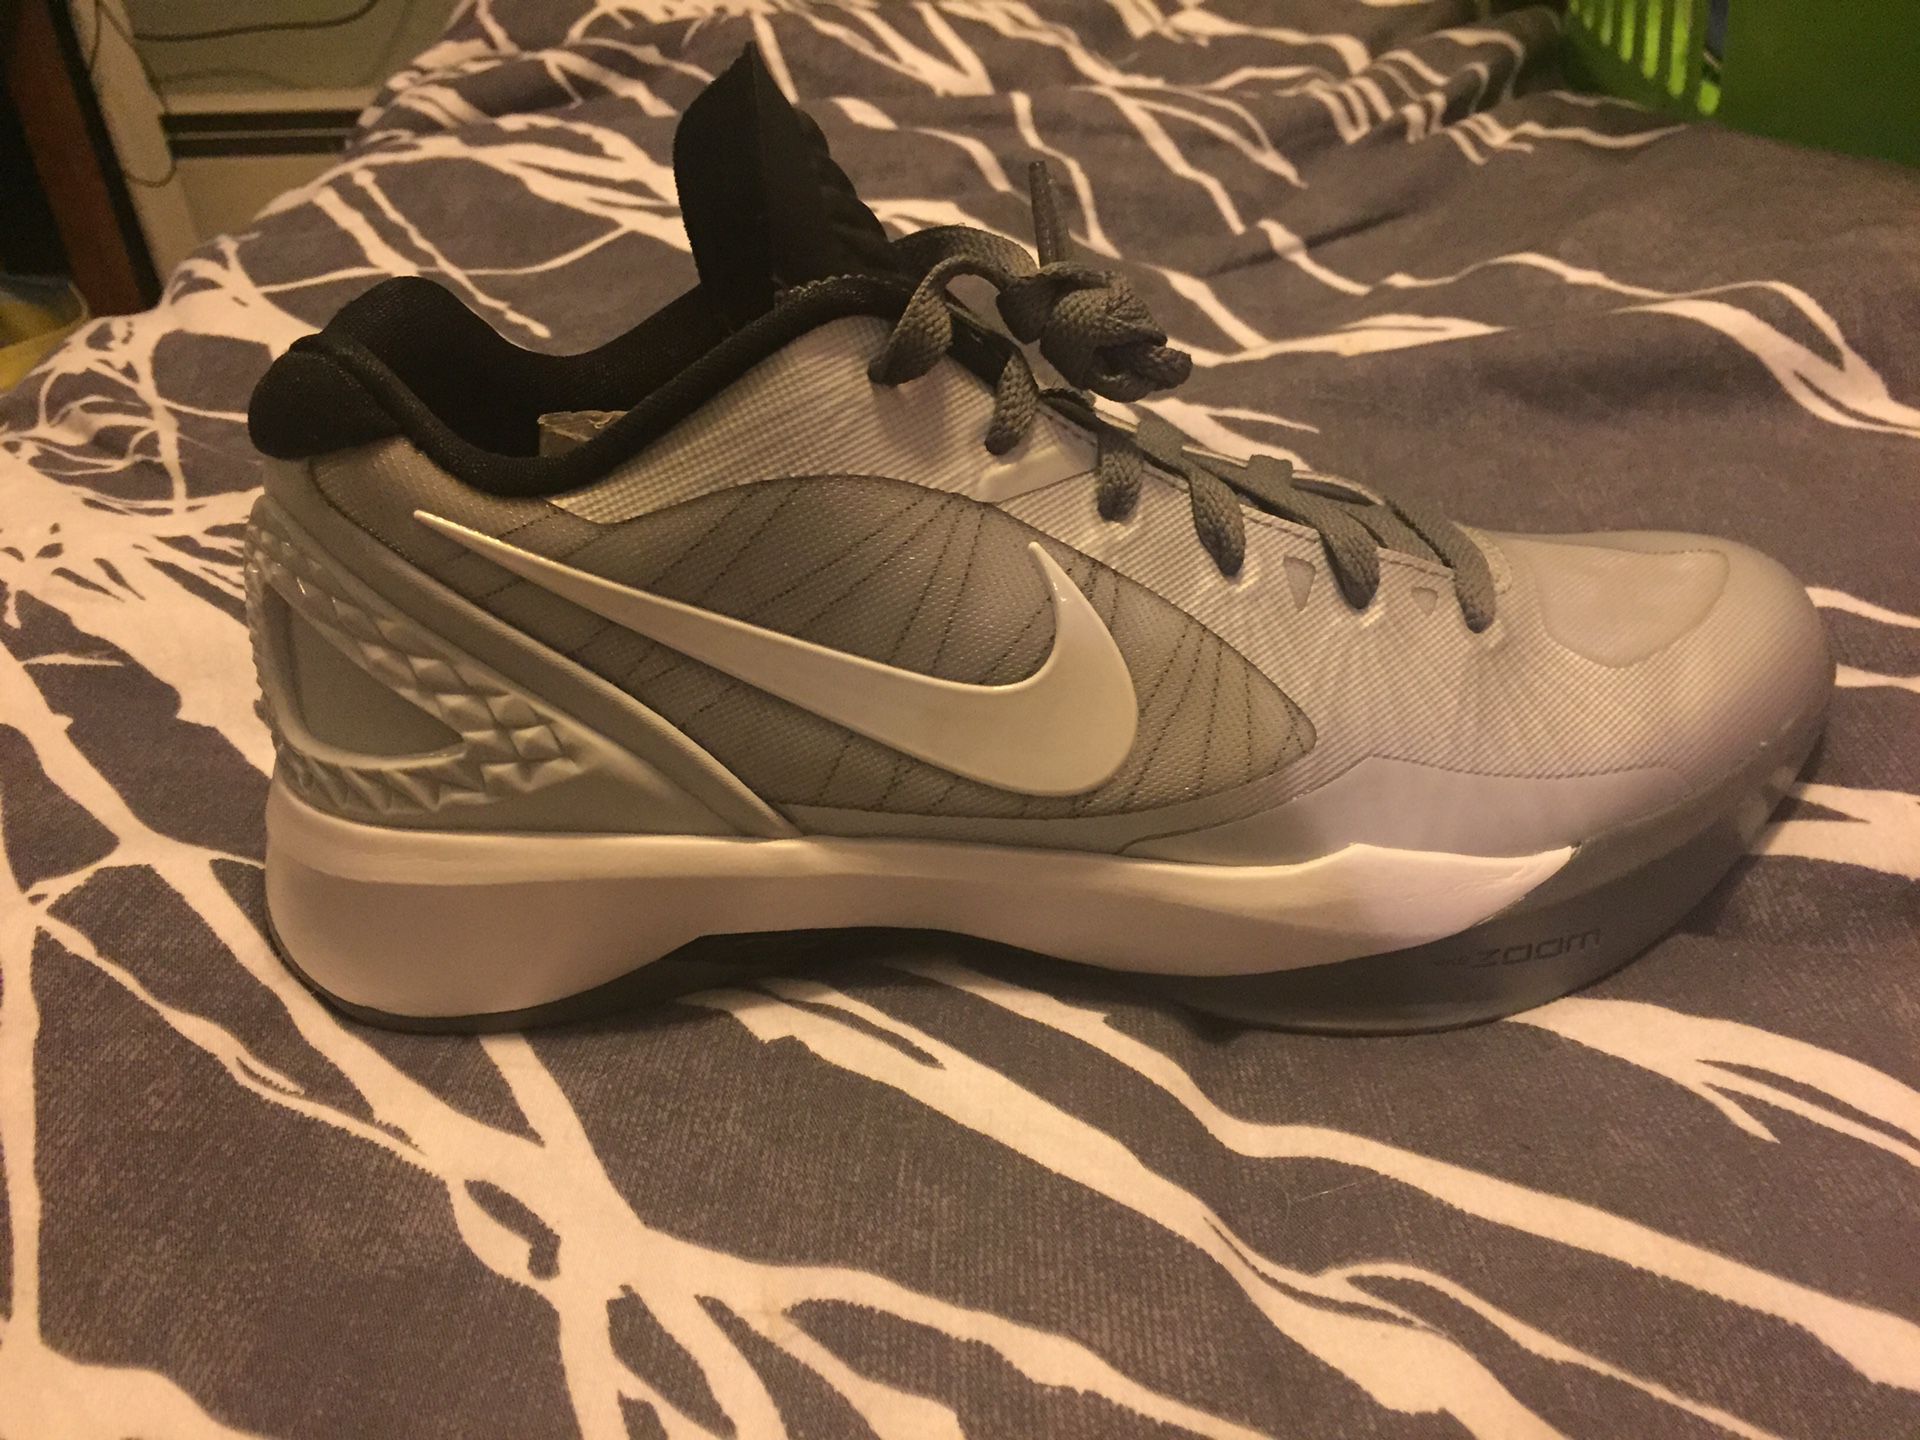 Nike volleyball shoe Zoom Hyperspike size 9.5